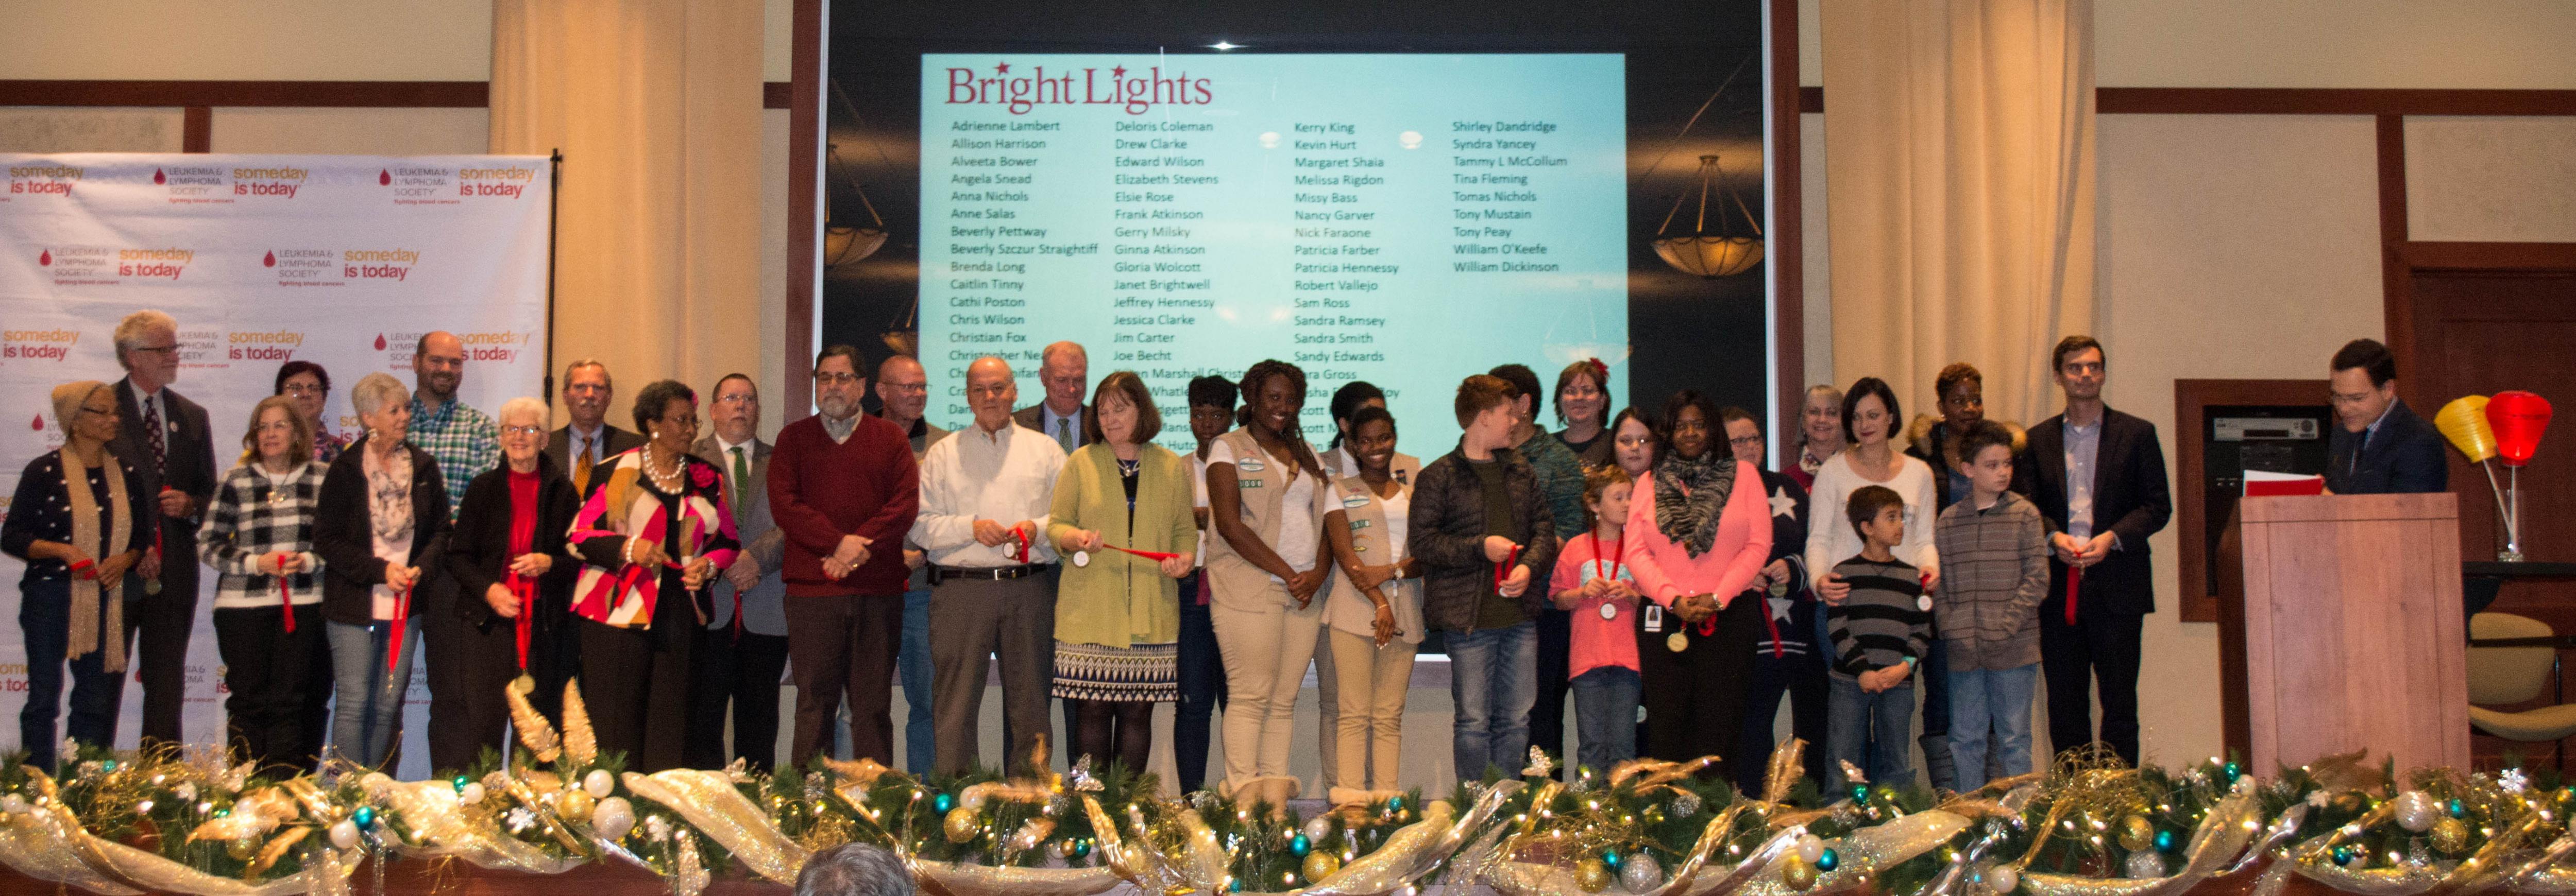 Light The Night Awards Celebration 2016